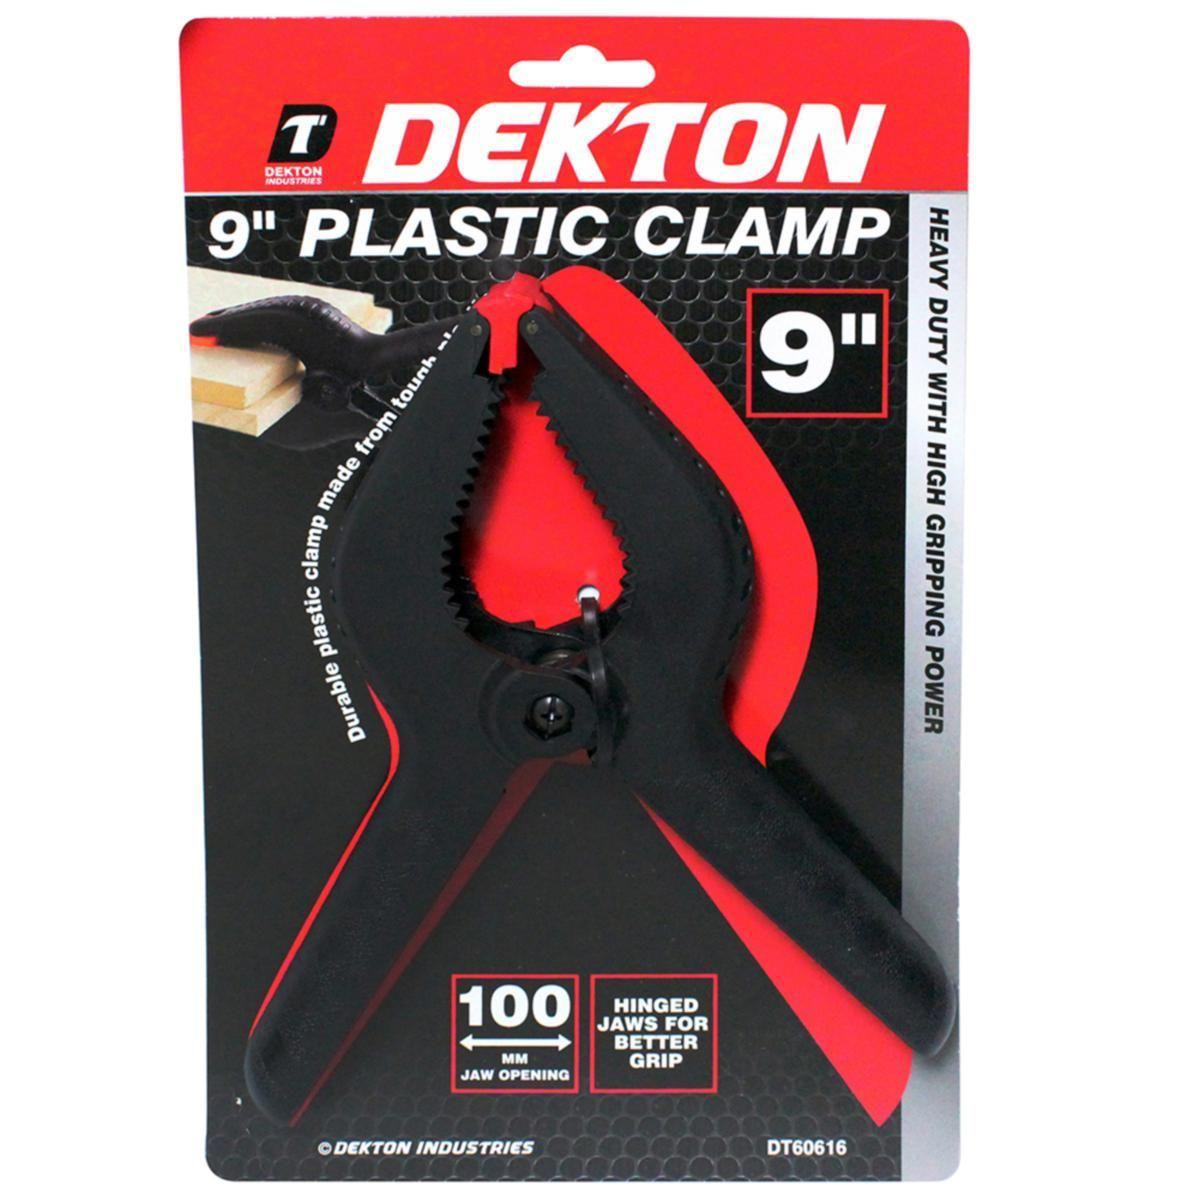 Dekton | 9" Plastic Clamp DT60616 - Choice Stores